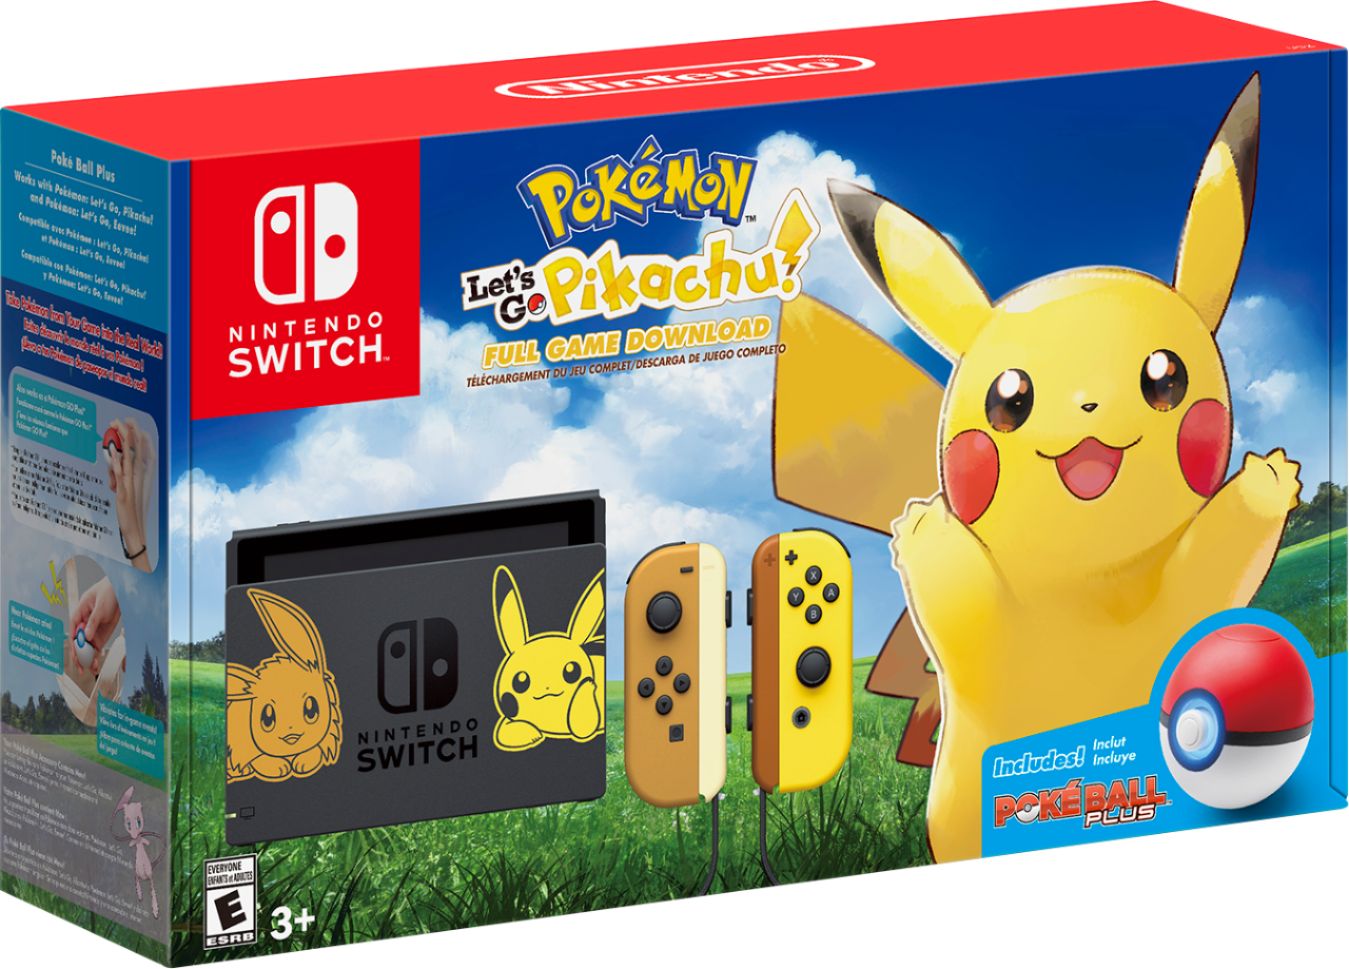 kinakål Skim minus Nintendo Switch Pikachu & Eevee Edition with Pokémon: Let's Go, Pikachu! +  Poké Ball Plus Gray HACSKFALF - Best Buy